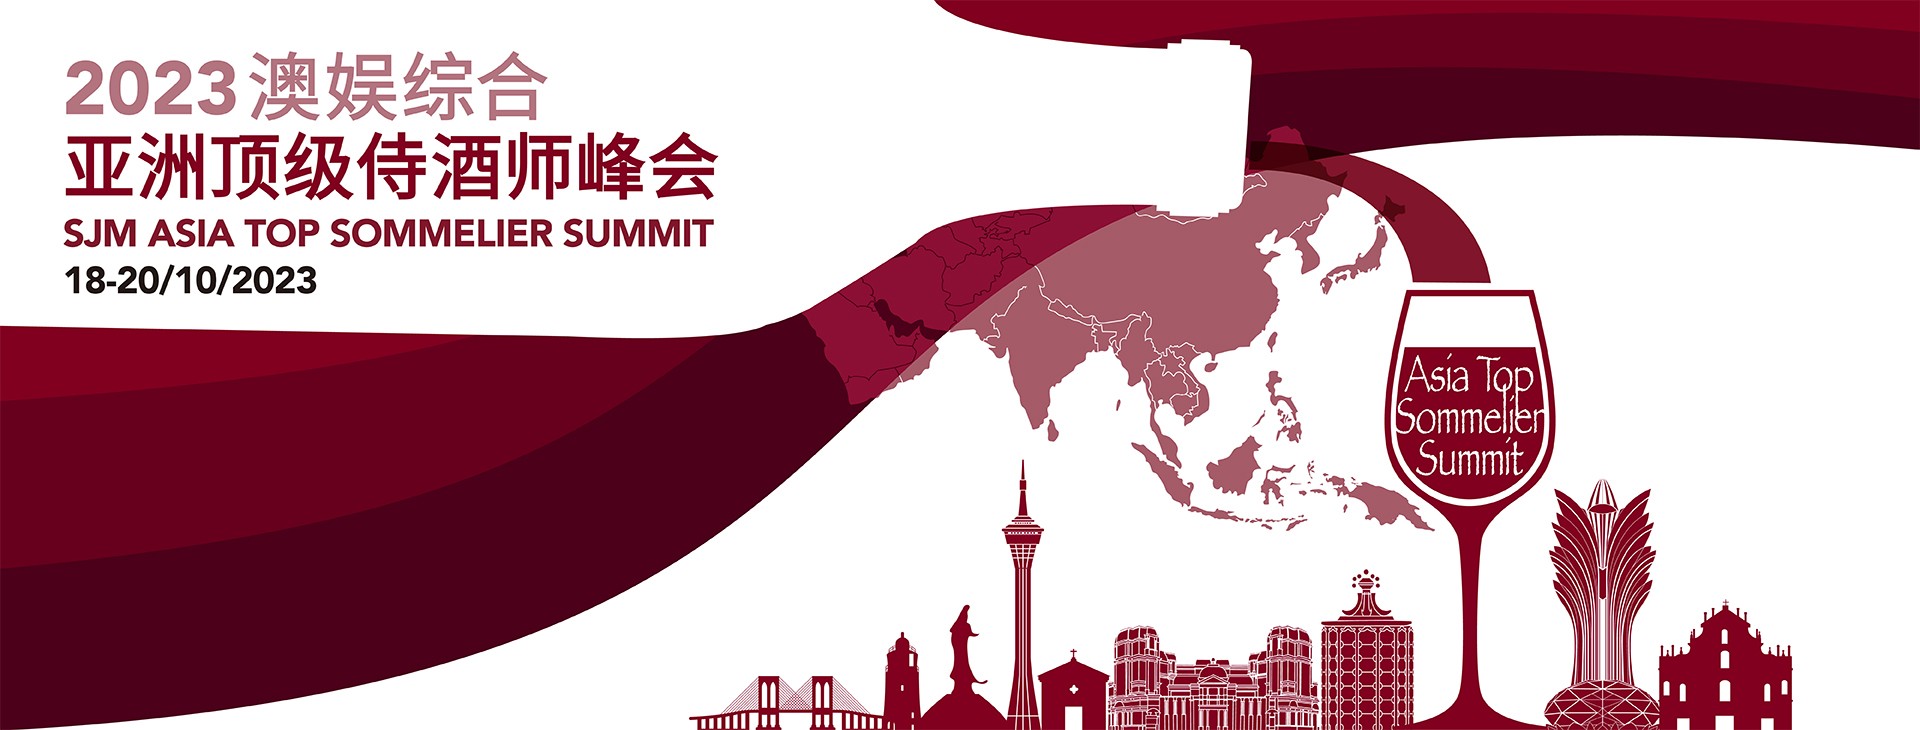 SJM Asia Top Sommelier Summit 2023